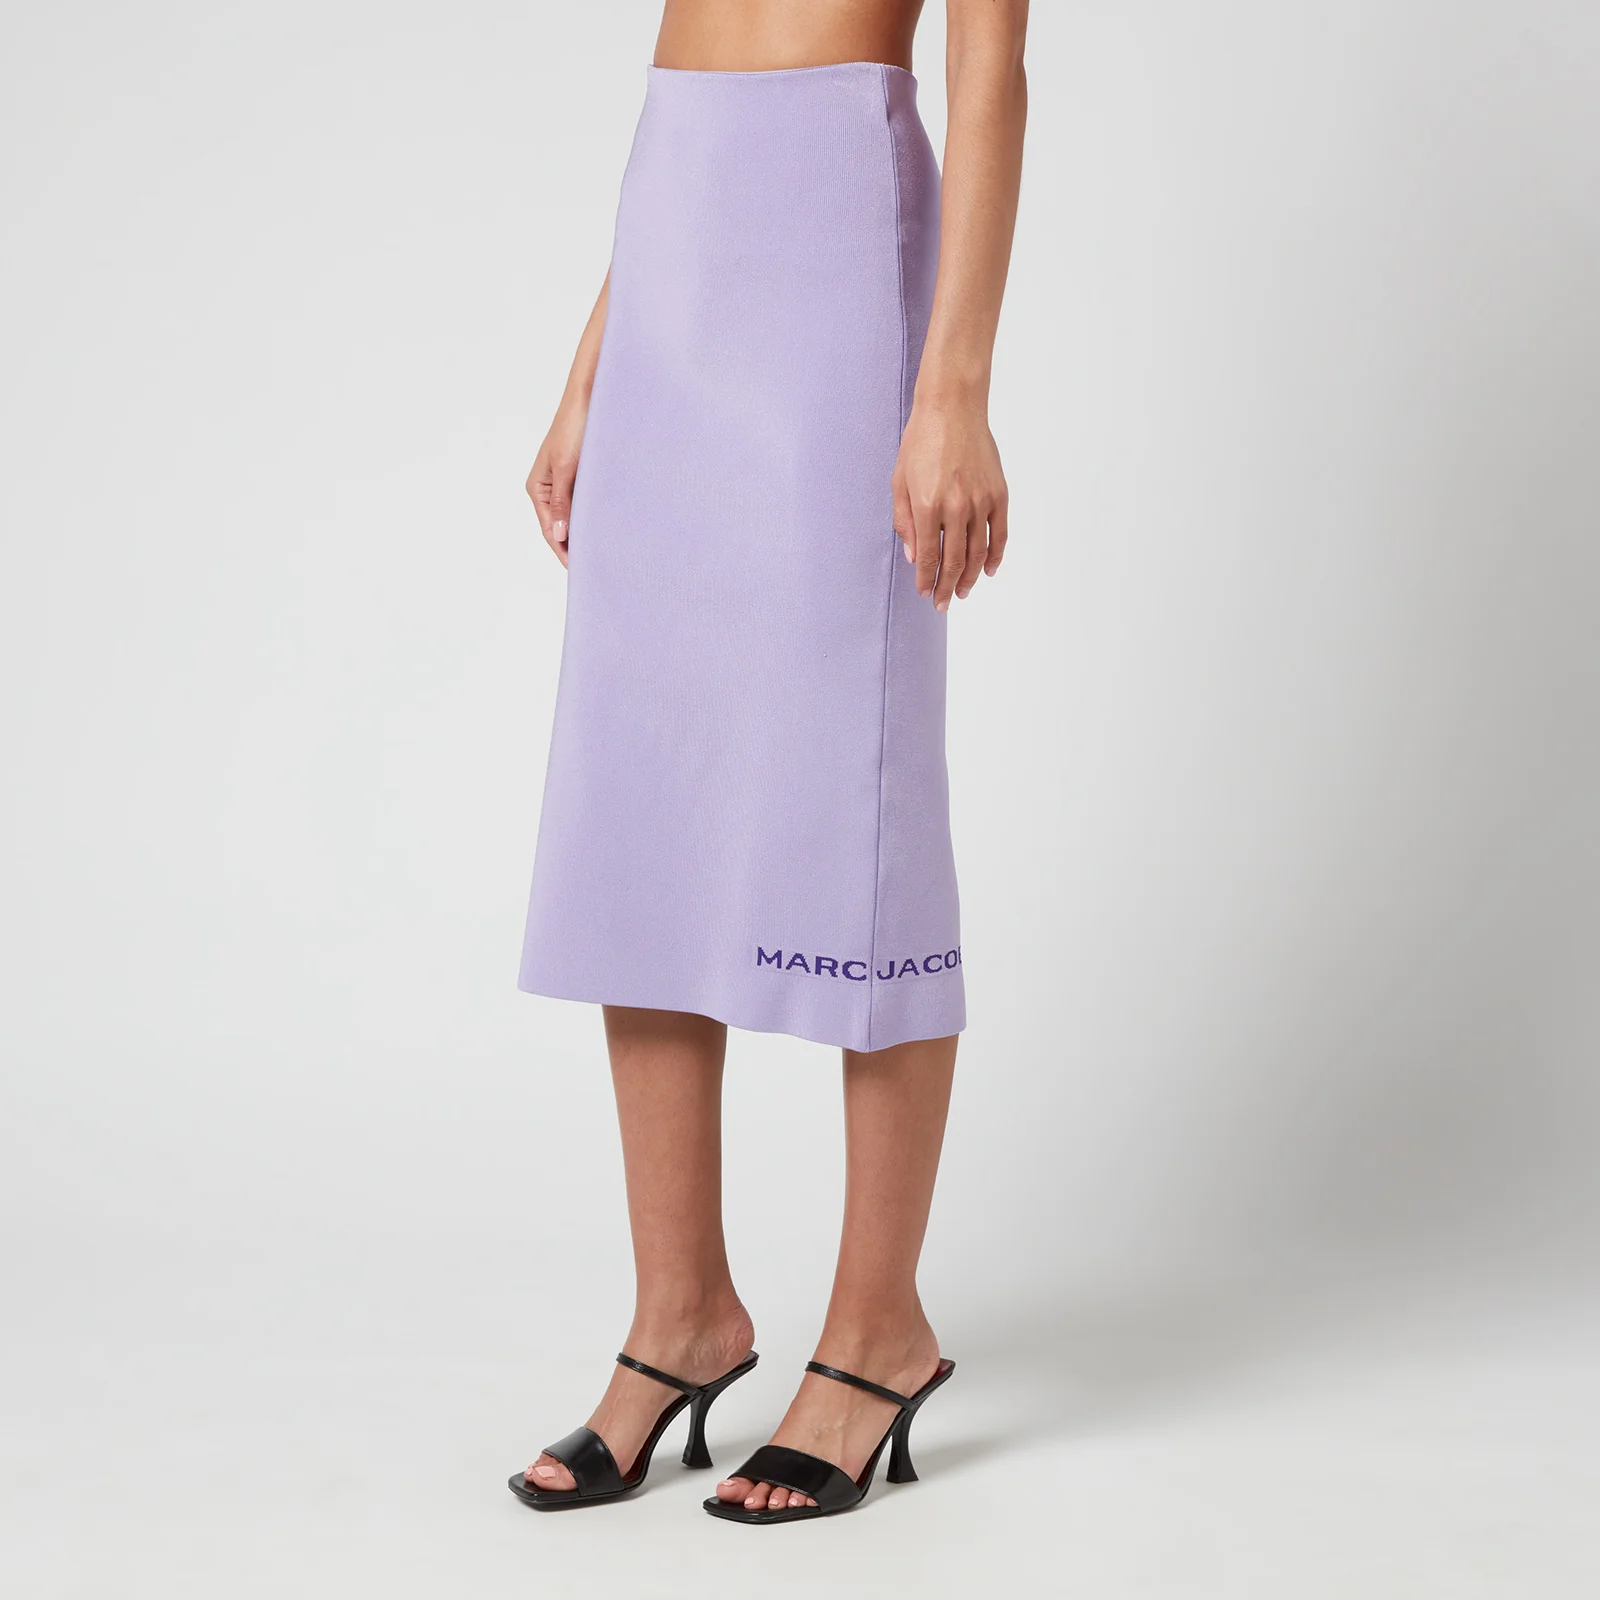 Marc Jacobs Women's The Tube Skirt - Purple Potion Image 1